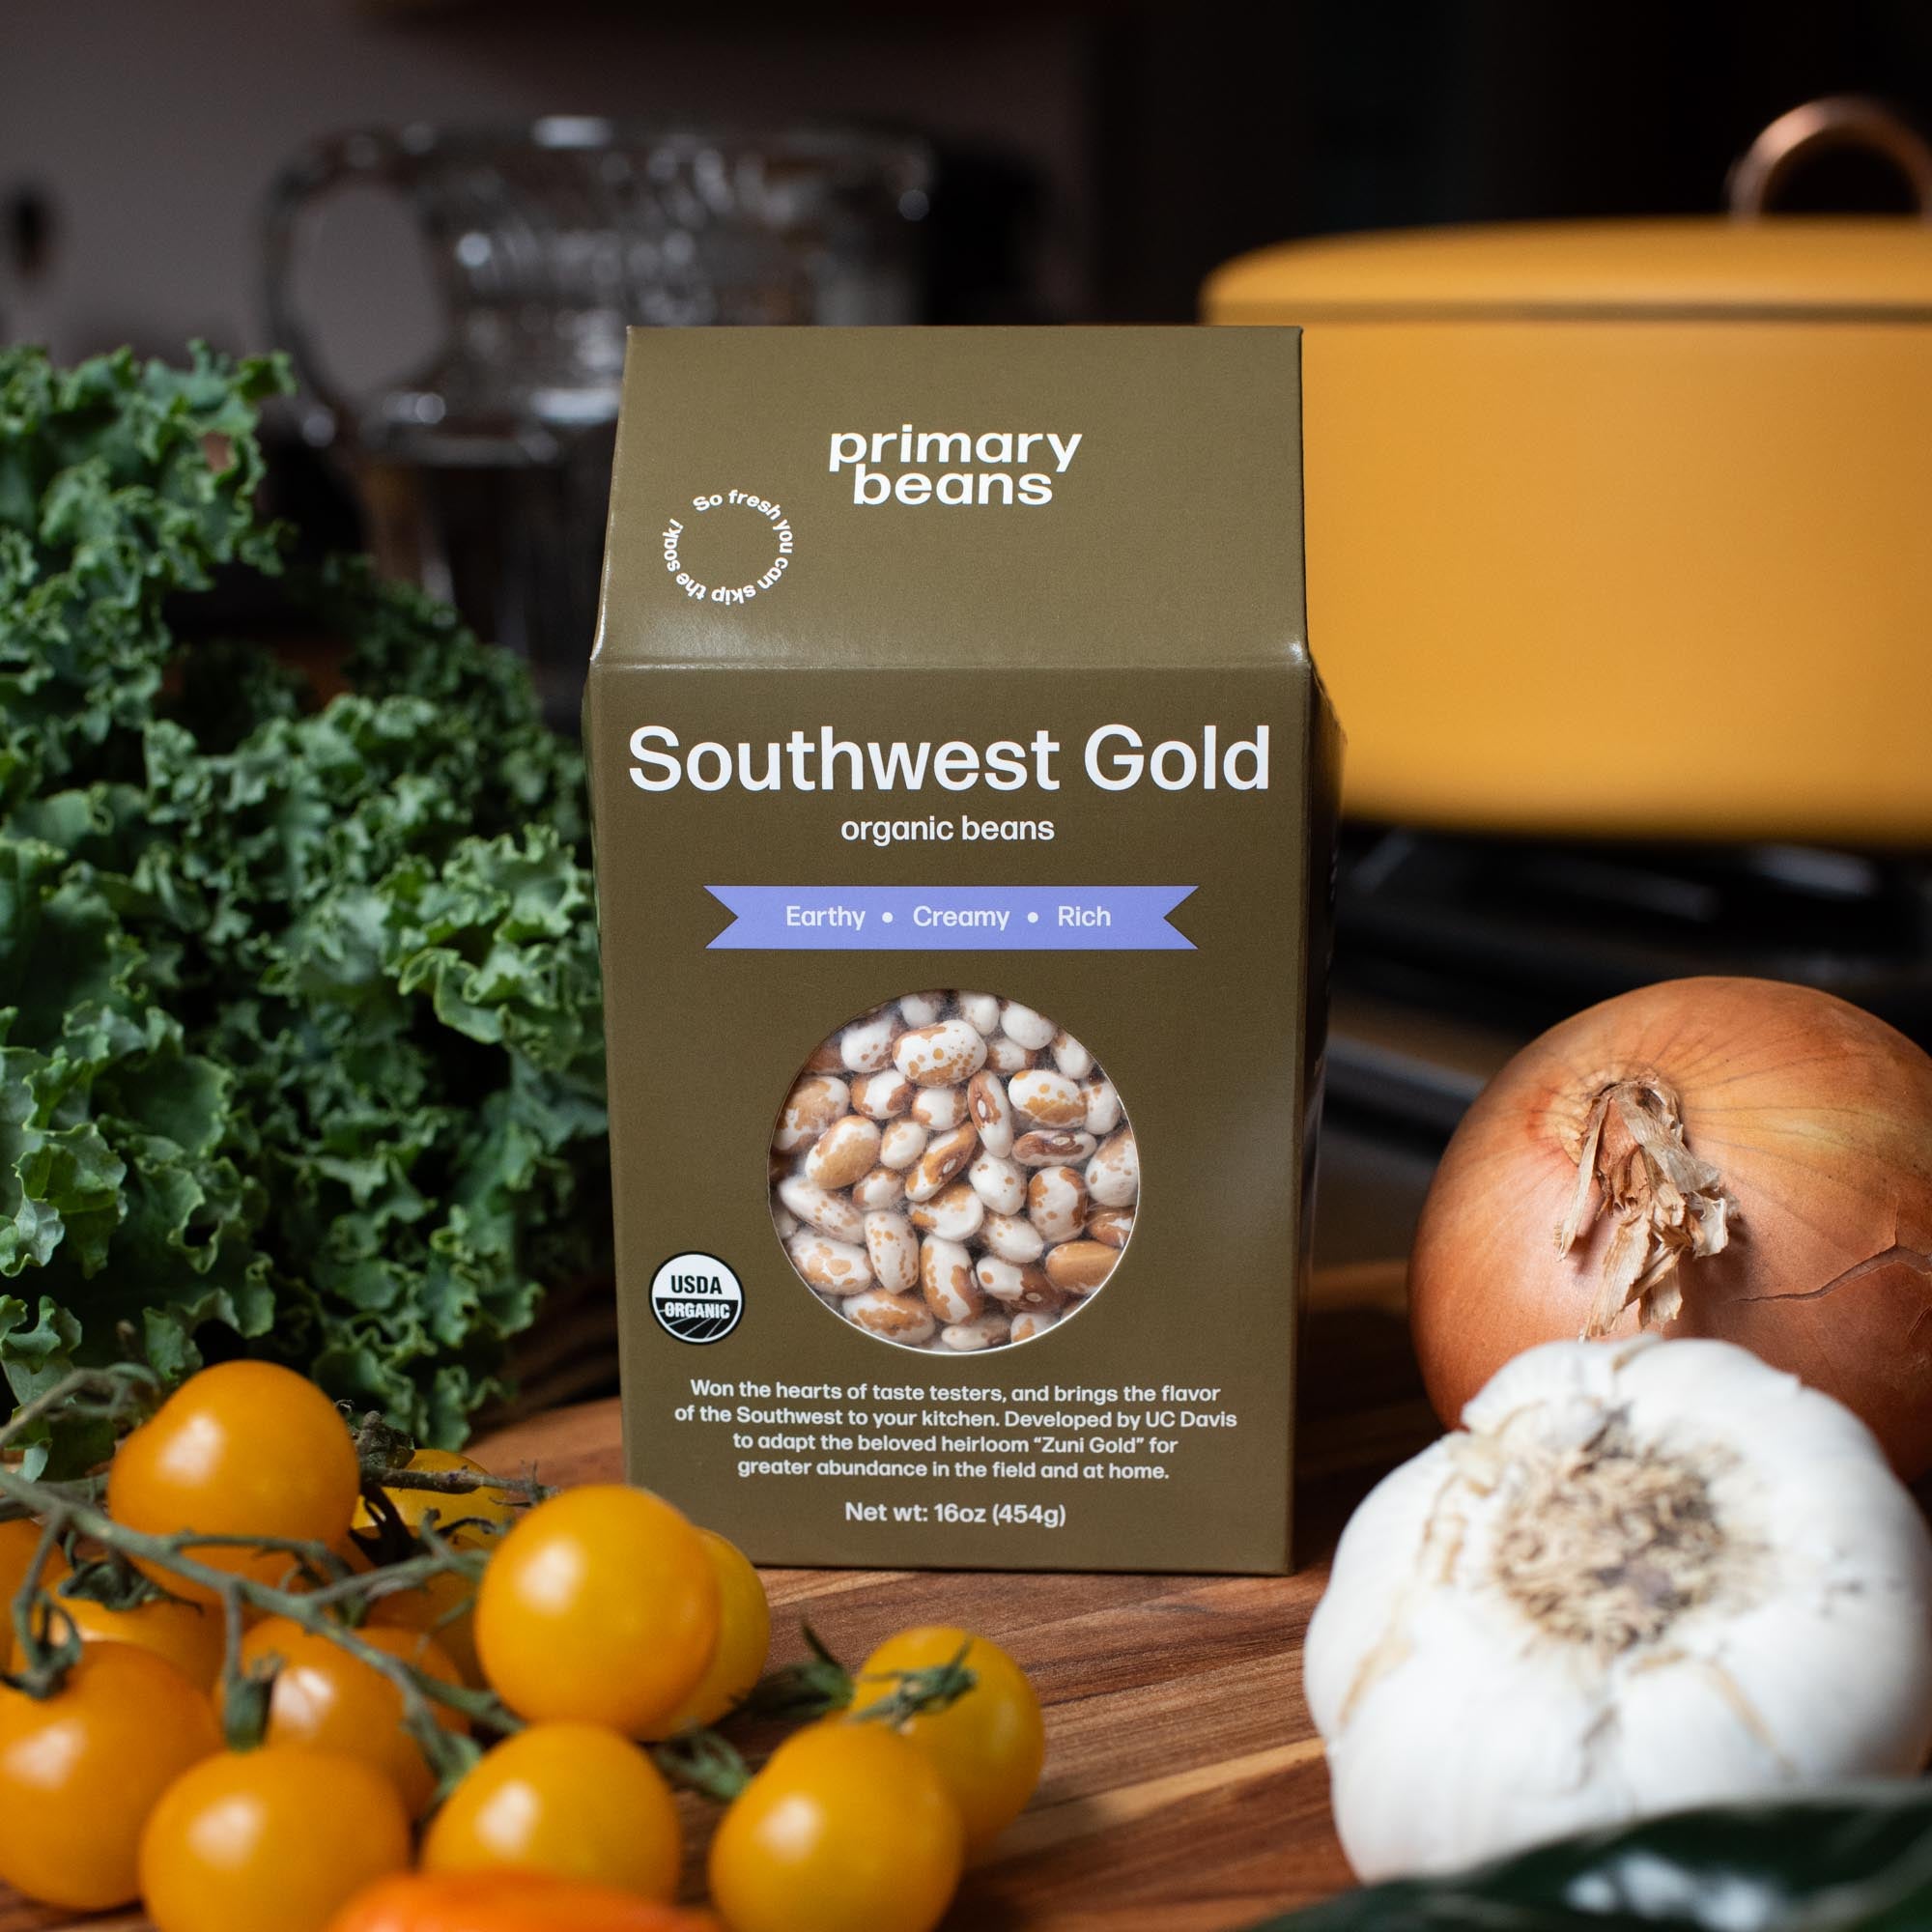 Southwest Gold beans (organic)